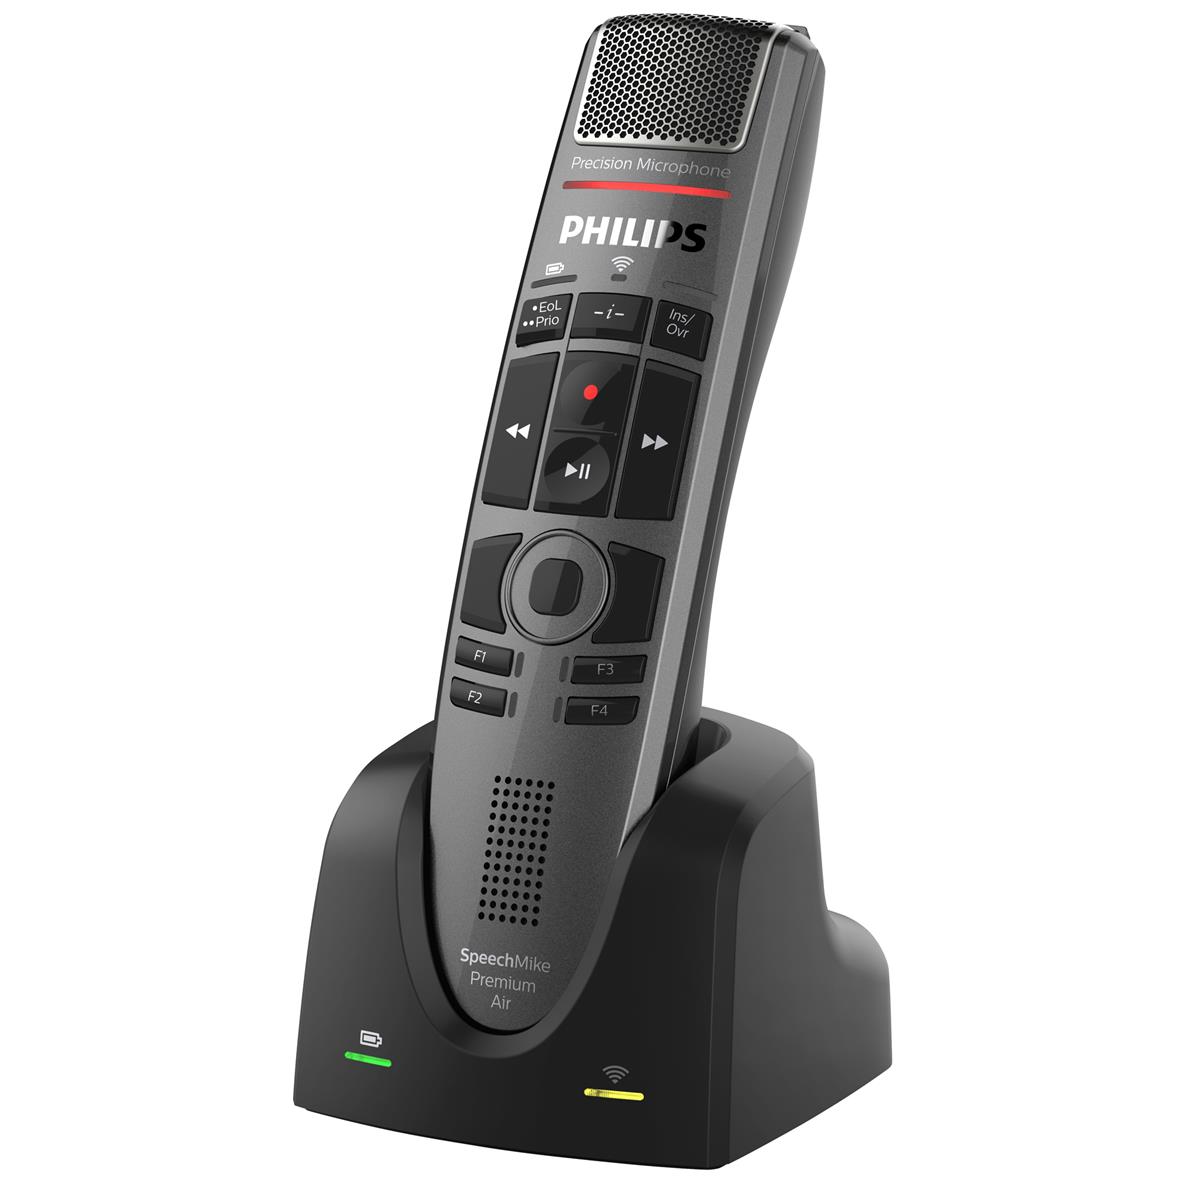 

Philips SpeechMike Premium Air Wireless Dictation USB Microphone, Push-Button